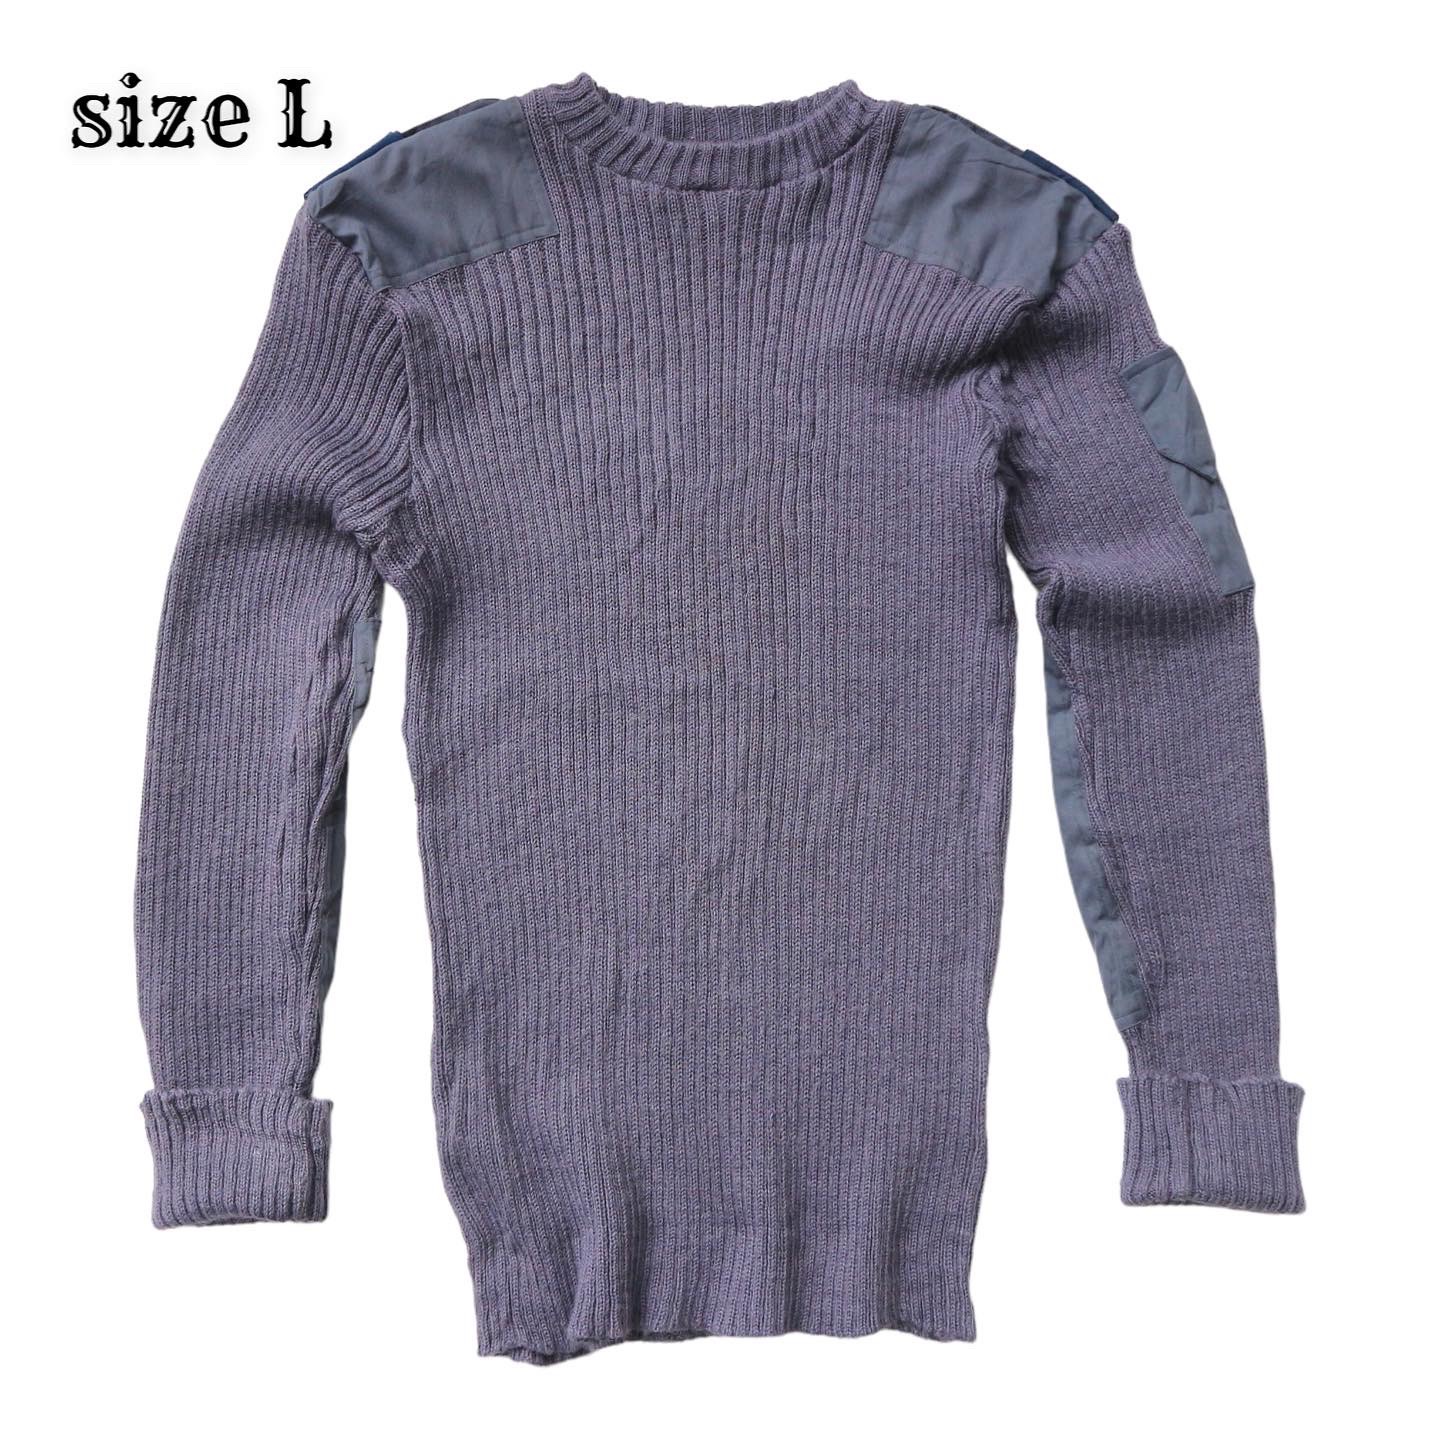 British Army Wool Combat Sweater Size L